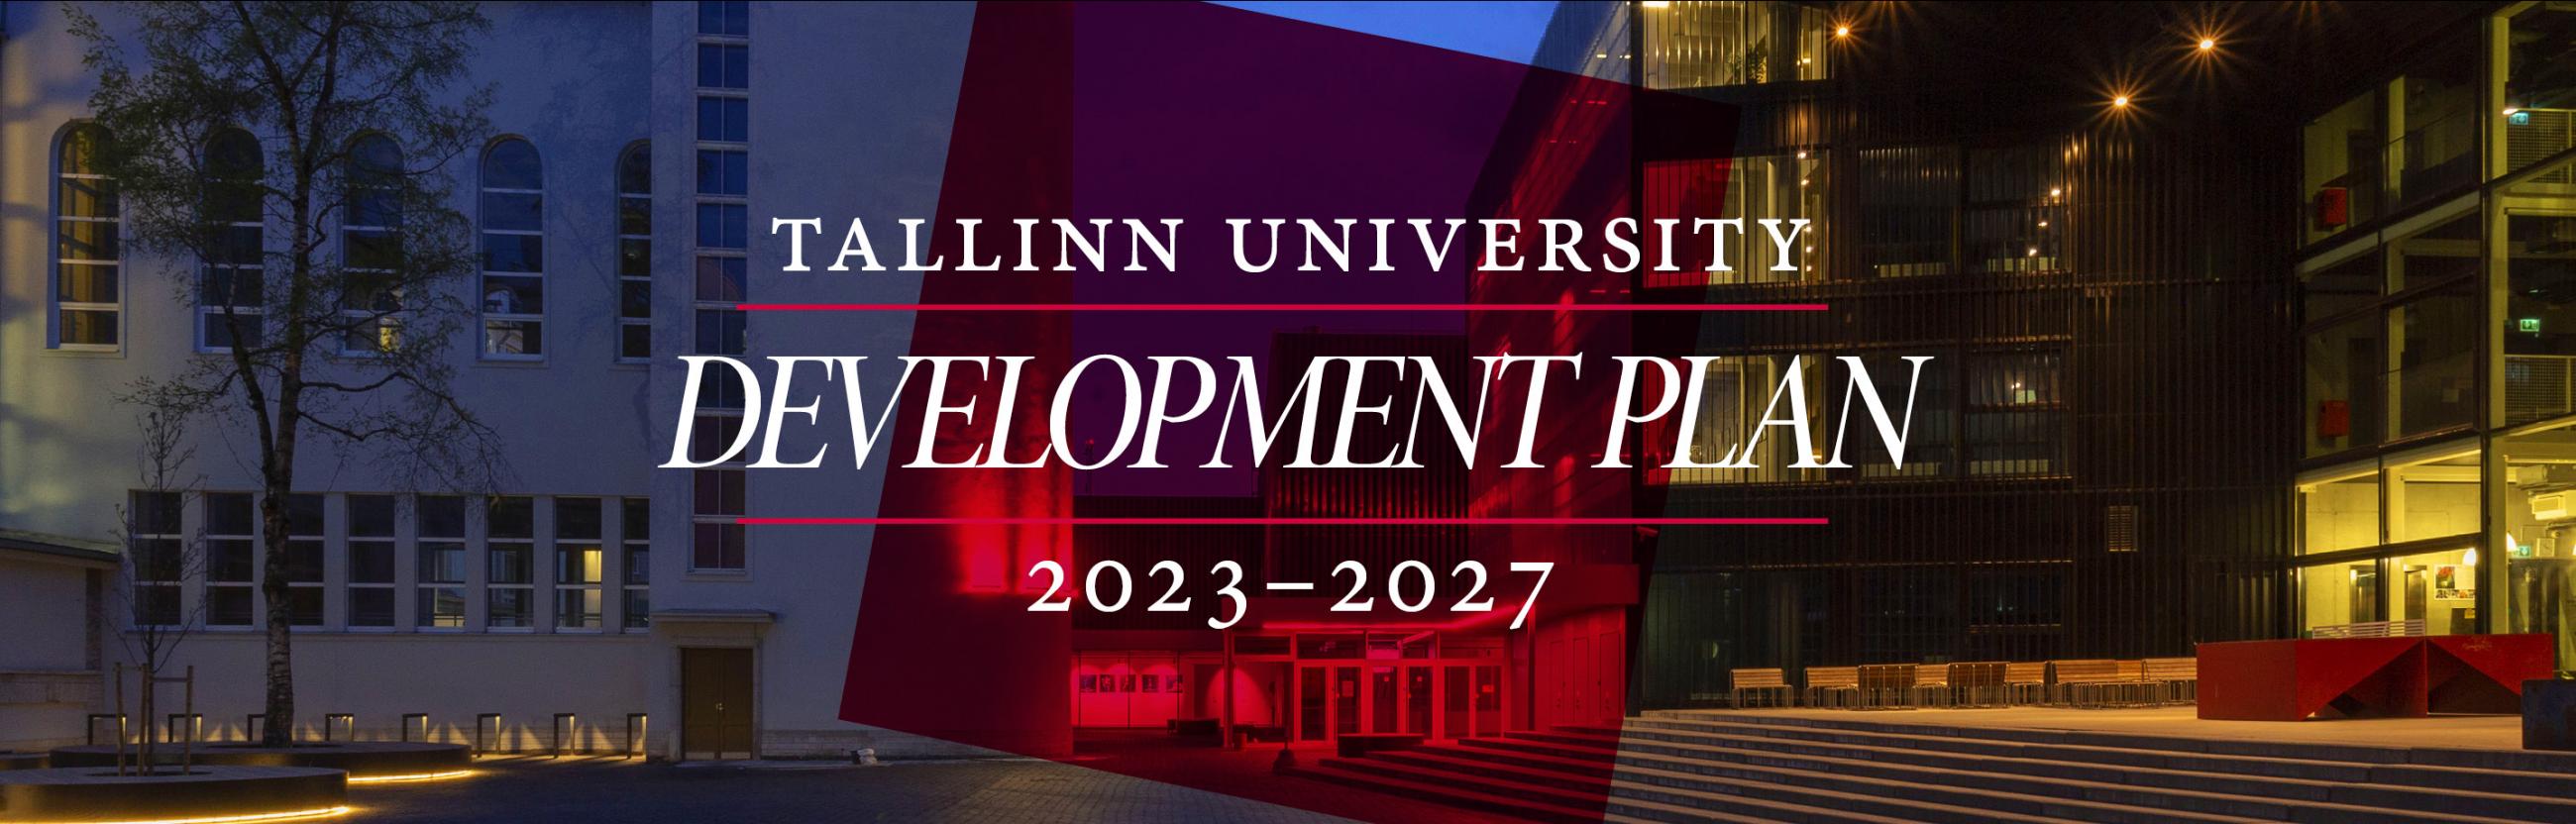 development plan banner